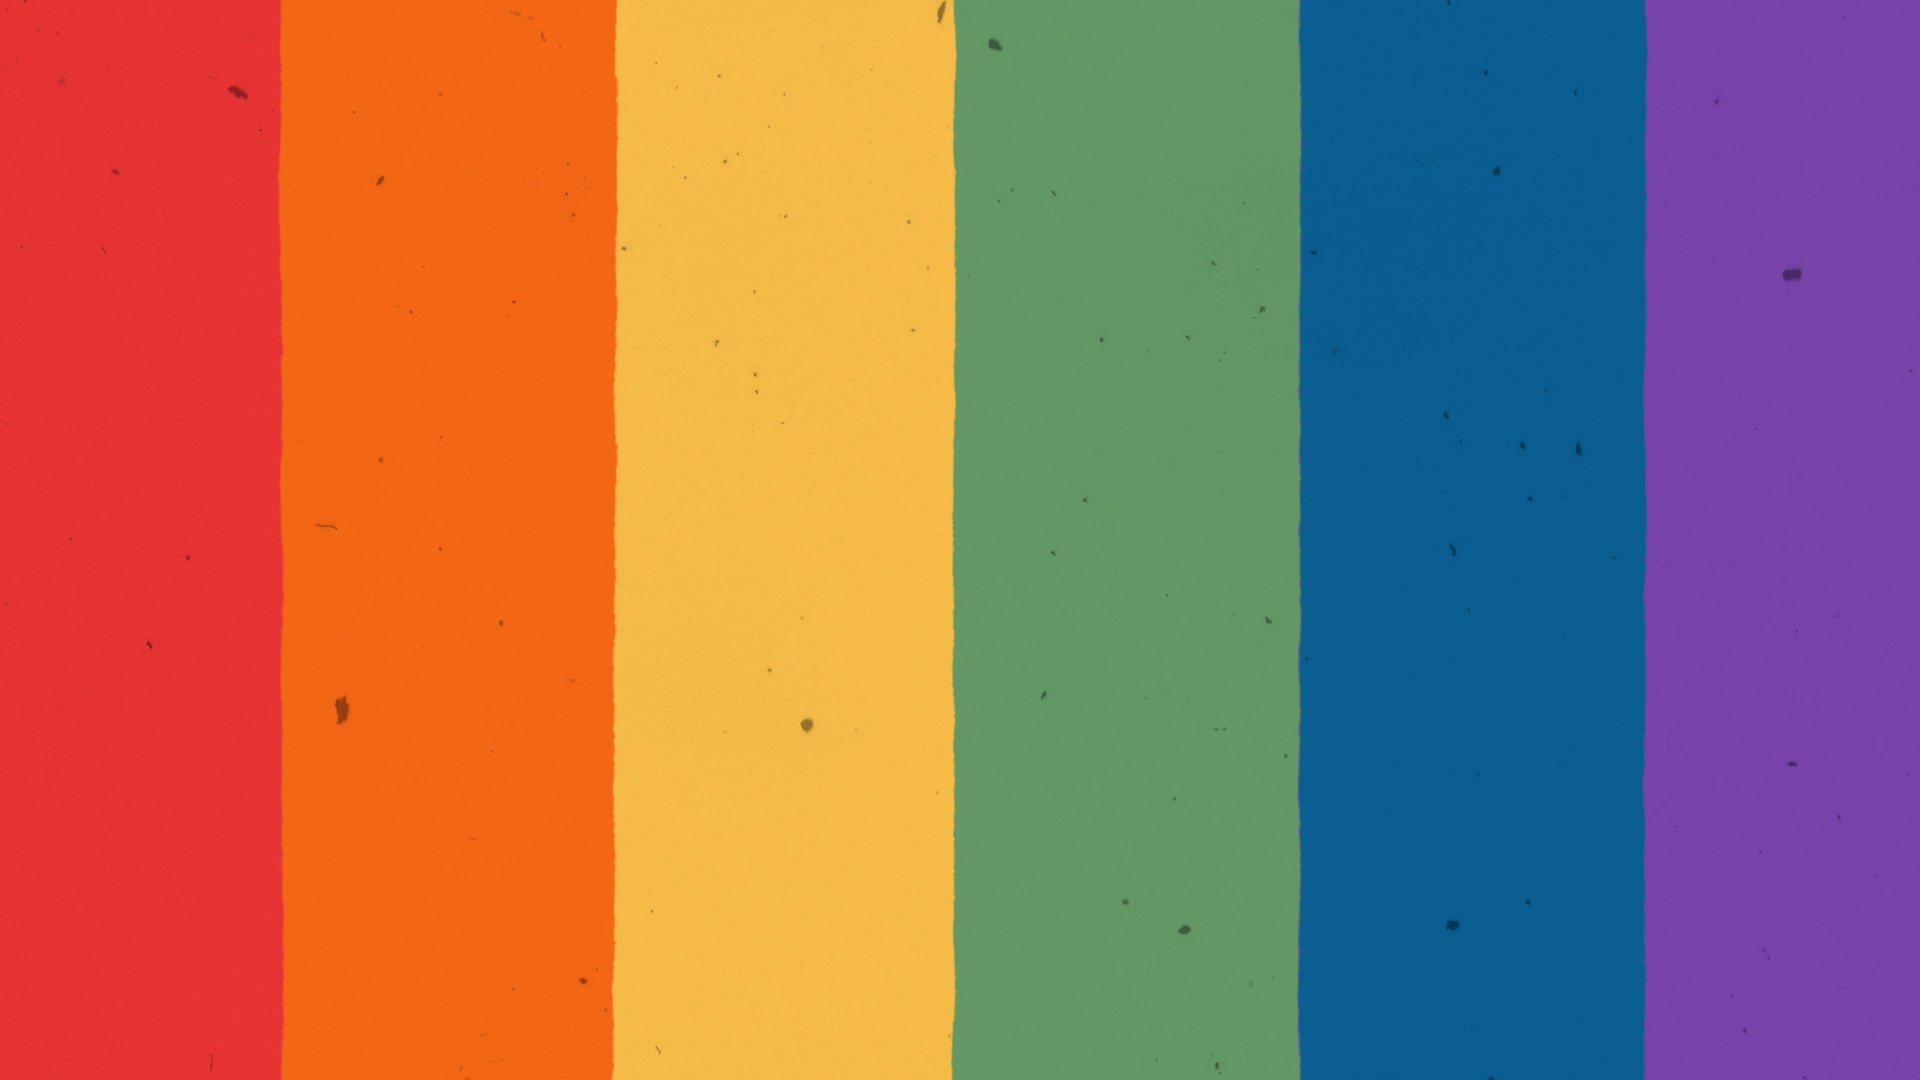 Pride flag: A history of the Gilbert Baker rainbow design